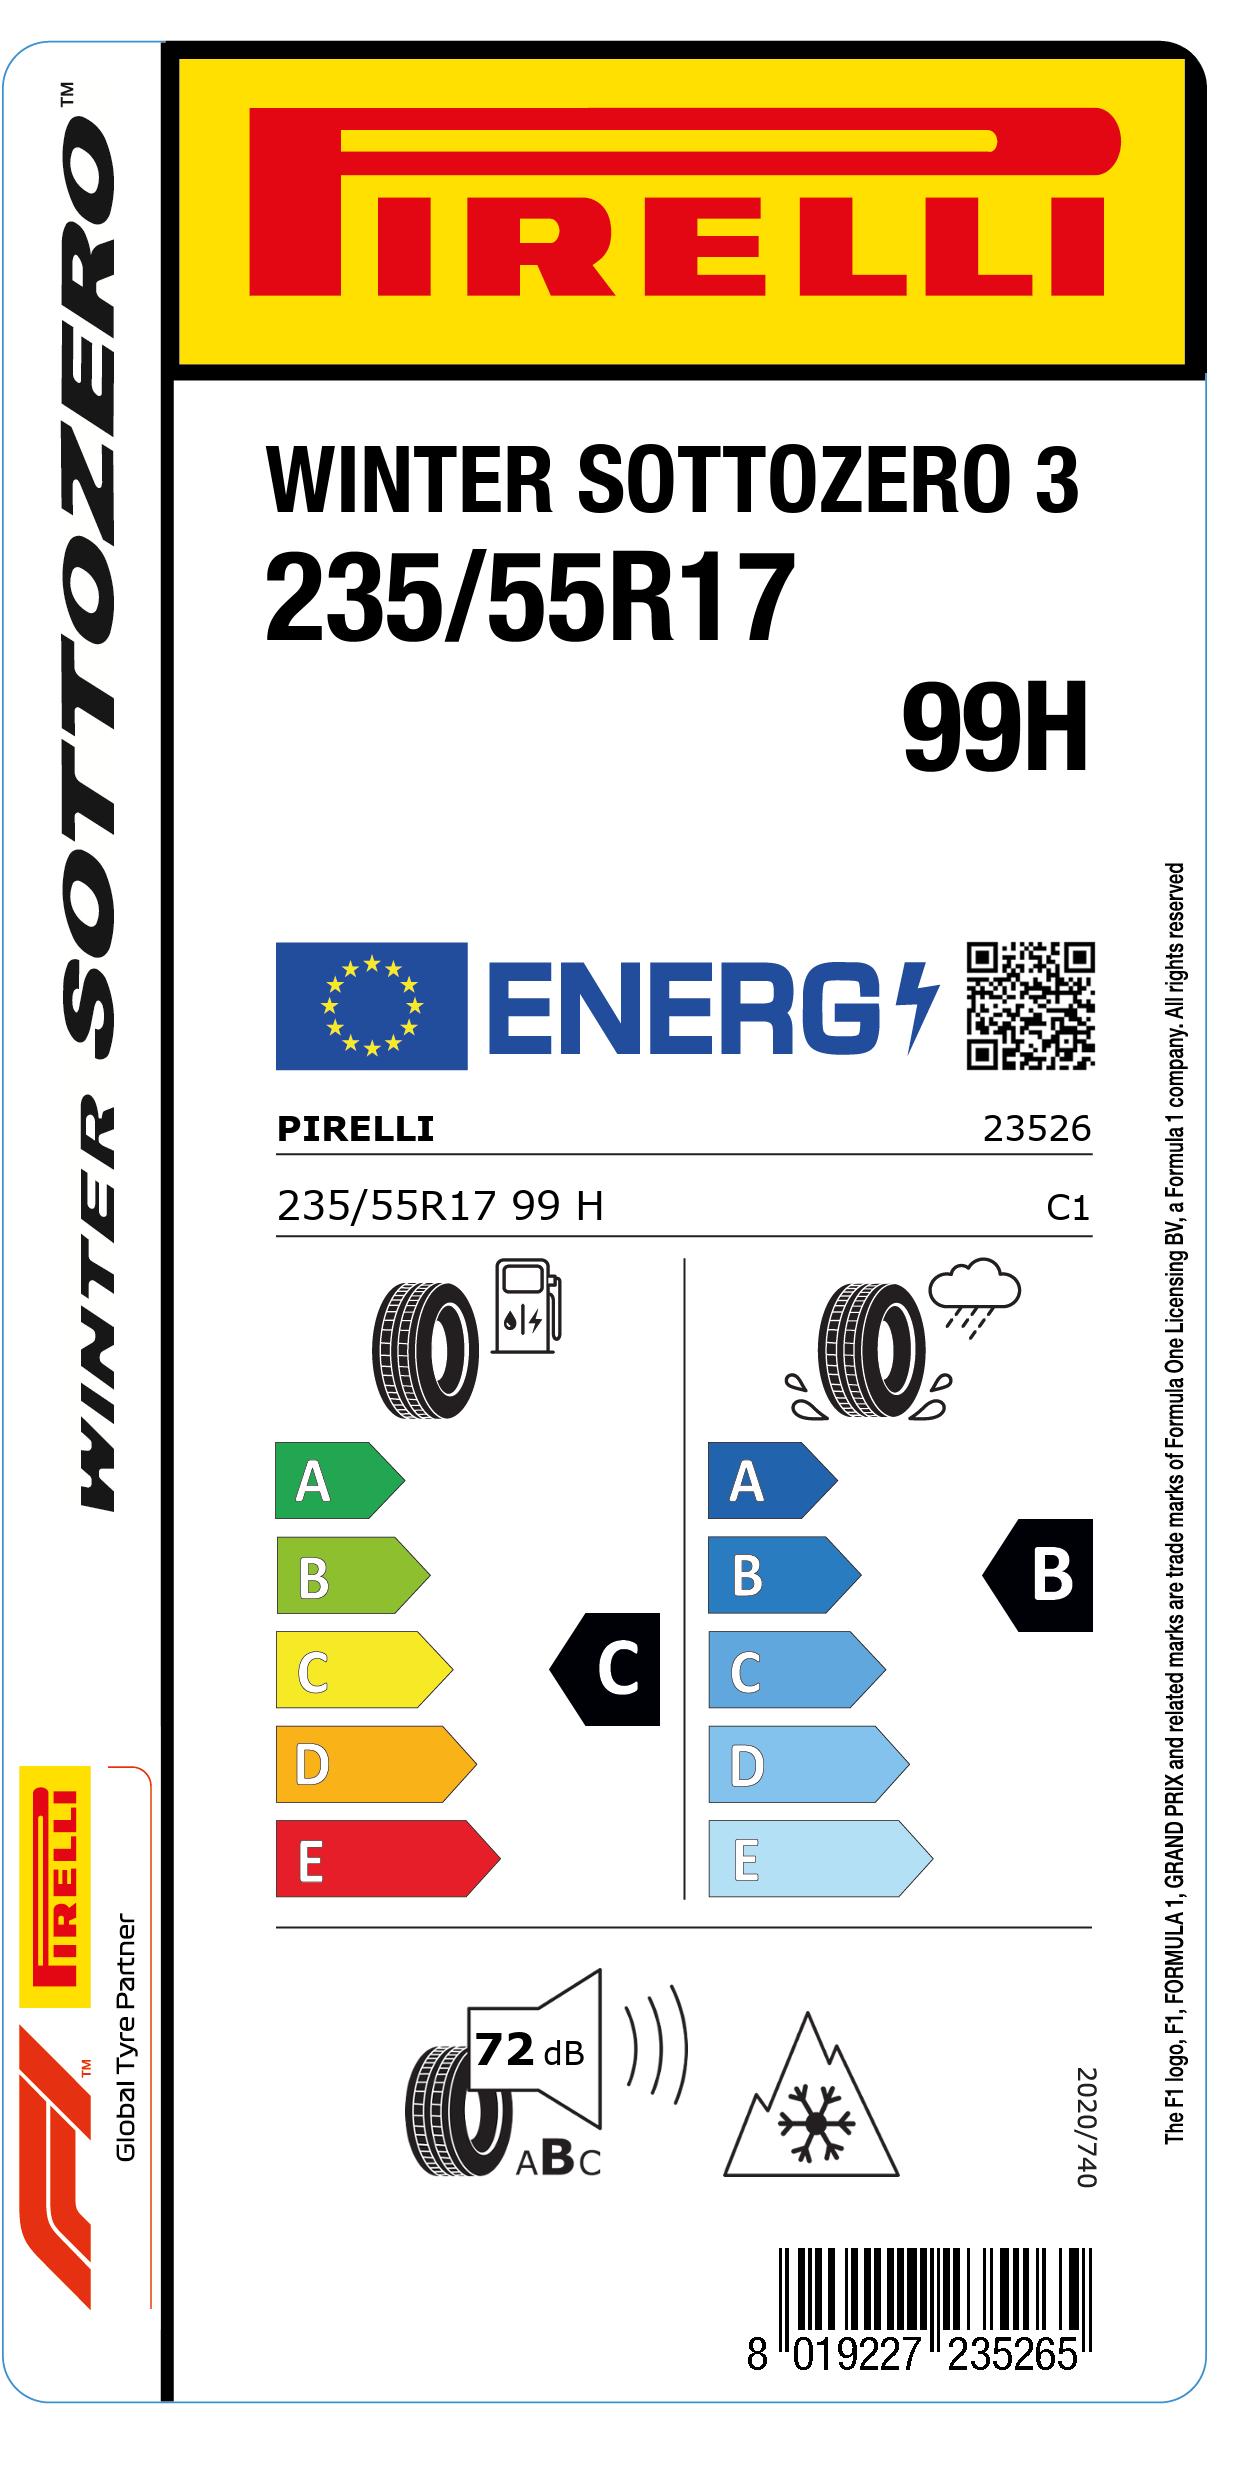 Etiquetado europeo del neumático